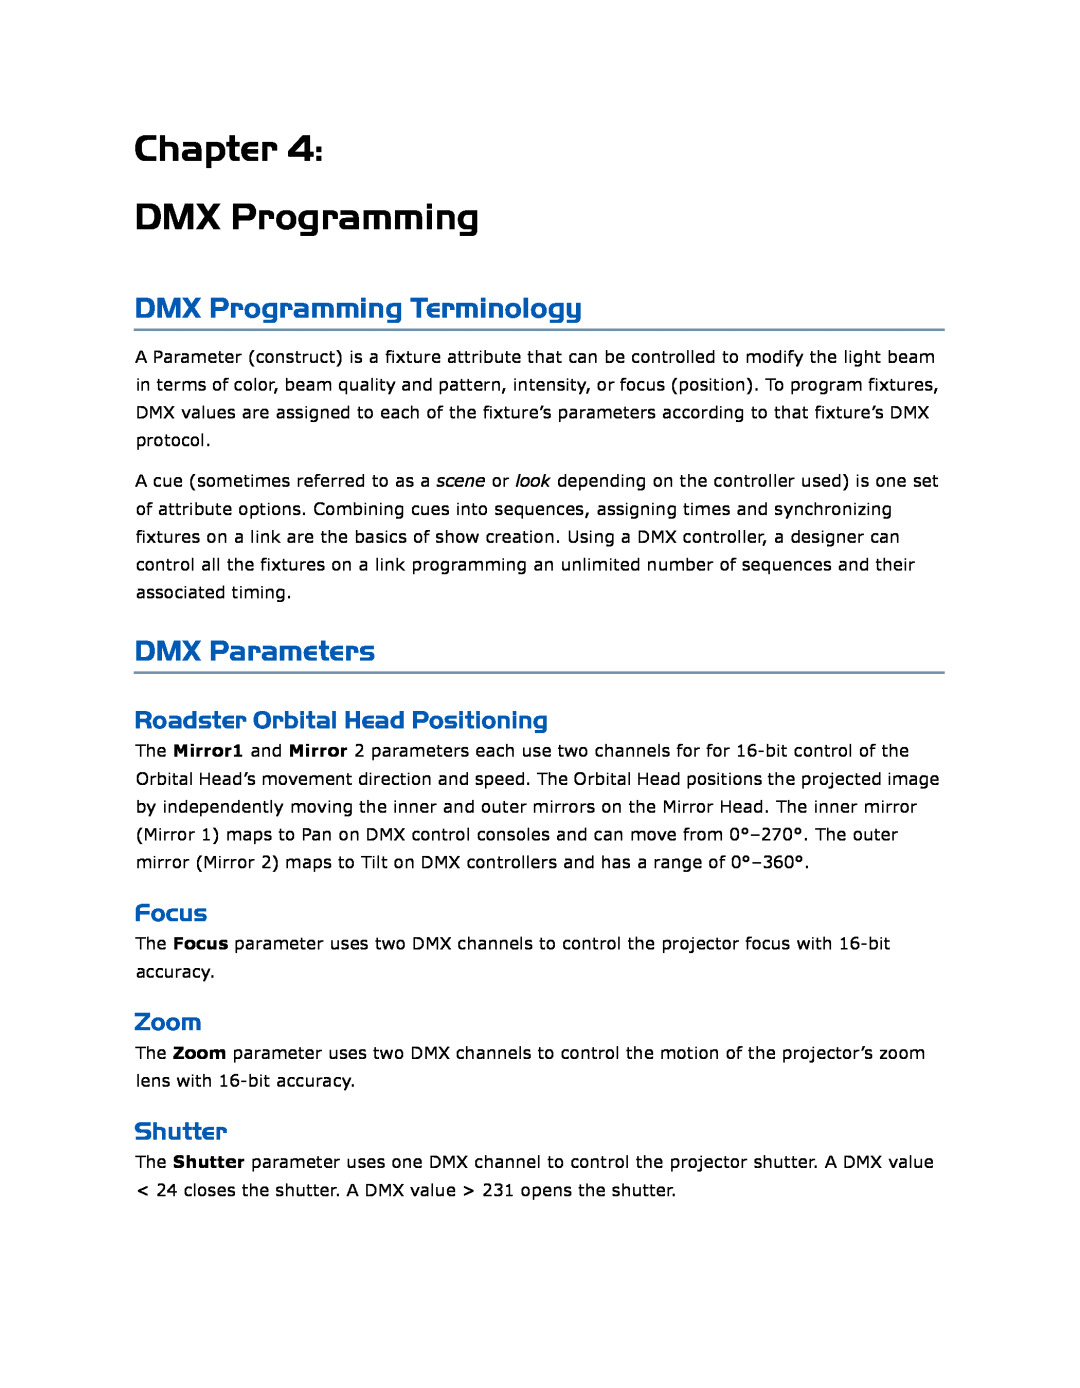 High End Systems Roadster Orbital Head System Chapter DMX Programming, DMX Programming Terminology, DMX Parameters, Focus 